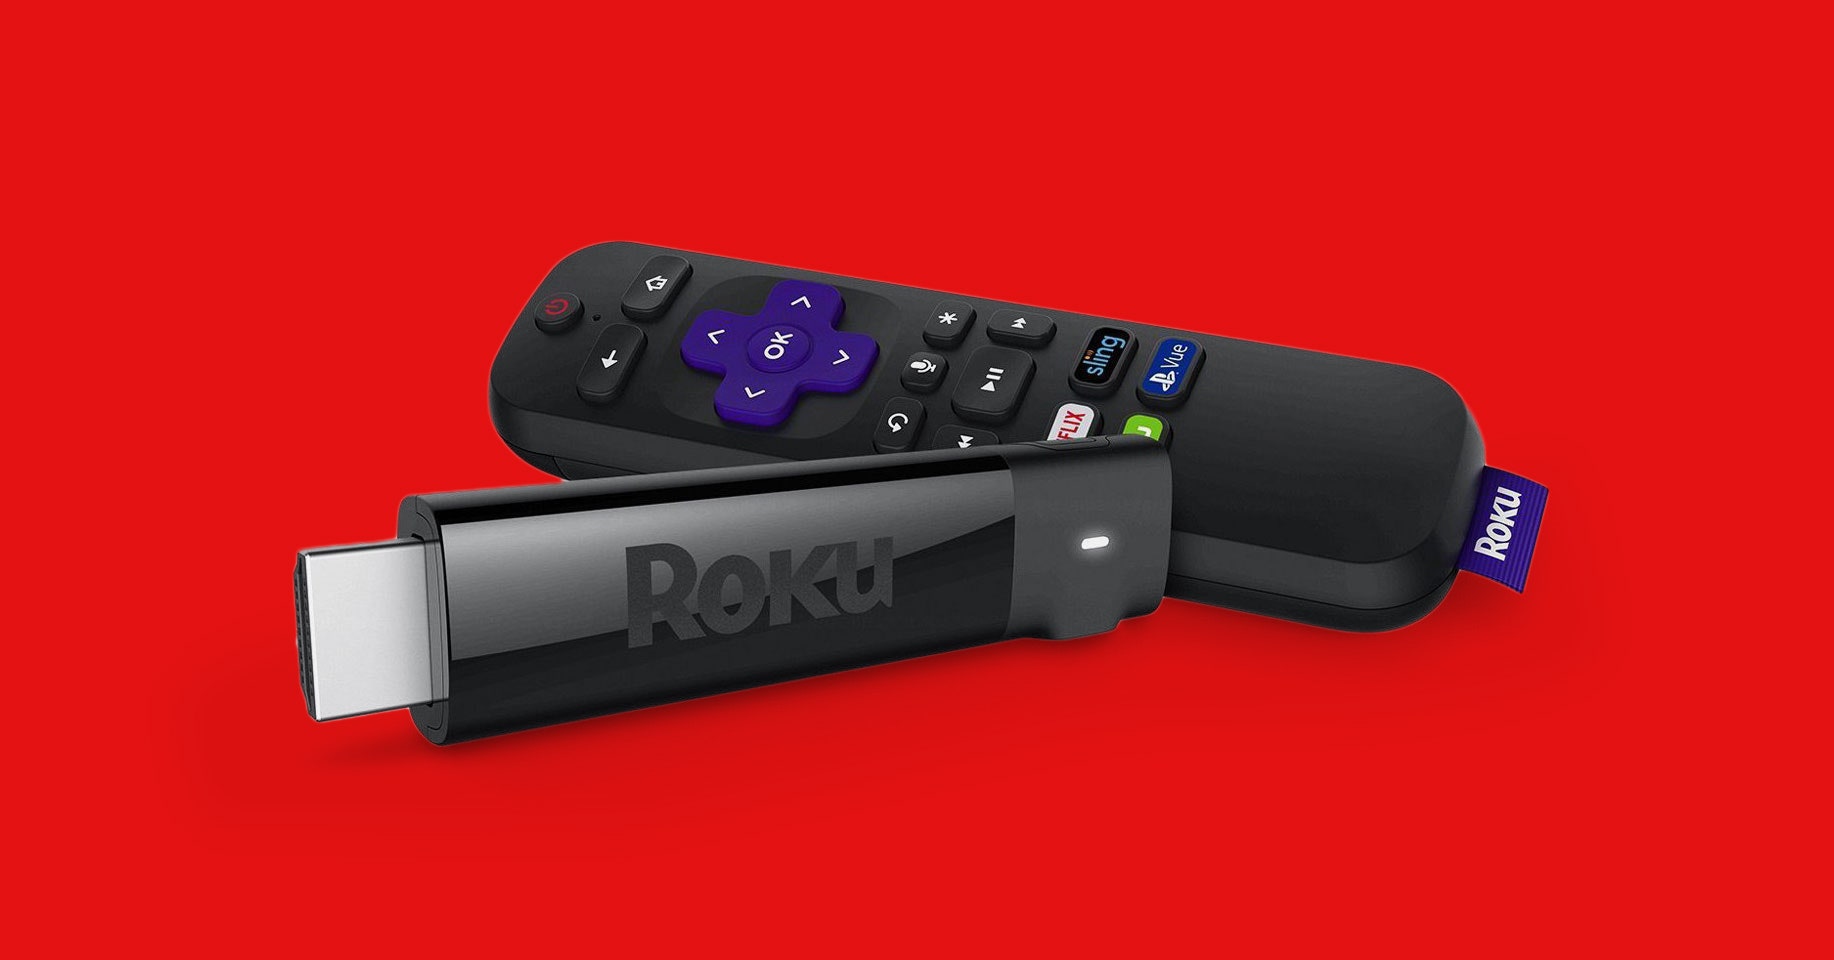 7 Best TV Streaming Devices for 2021 (4K, HD): Roku vs. Fire TV vs. Apple TV vs. Google